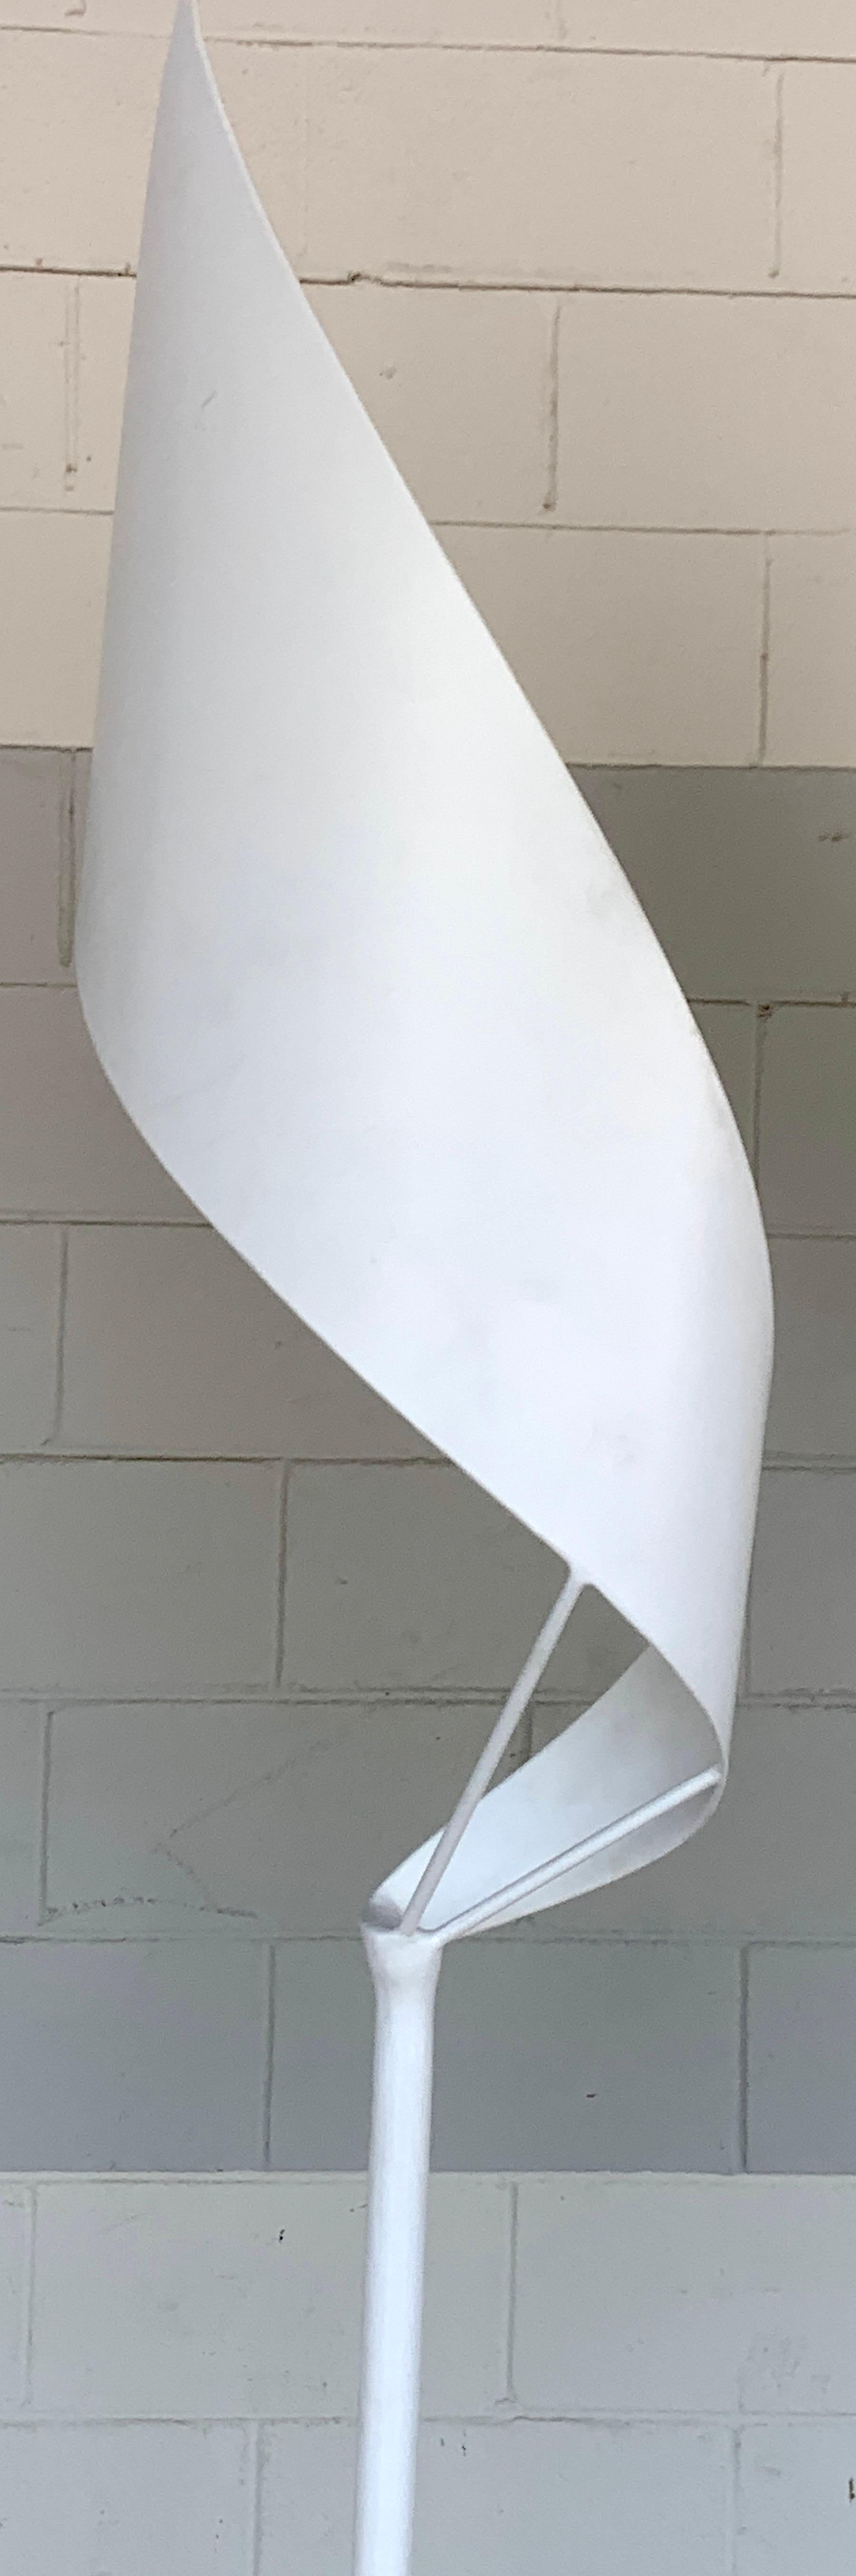 American Large Modern White Enameled Forged Steel Kinetic Sculpture '95 M.G. La Mair'